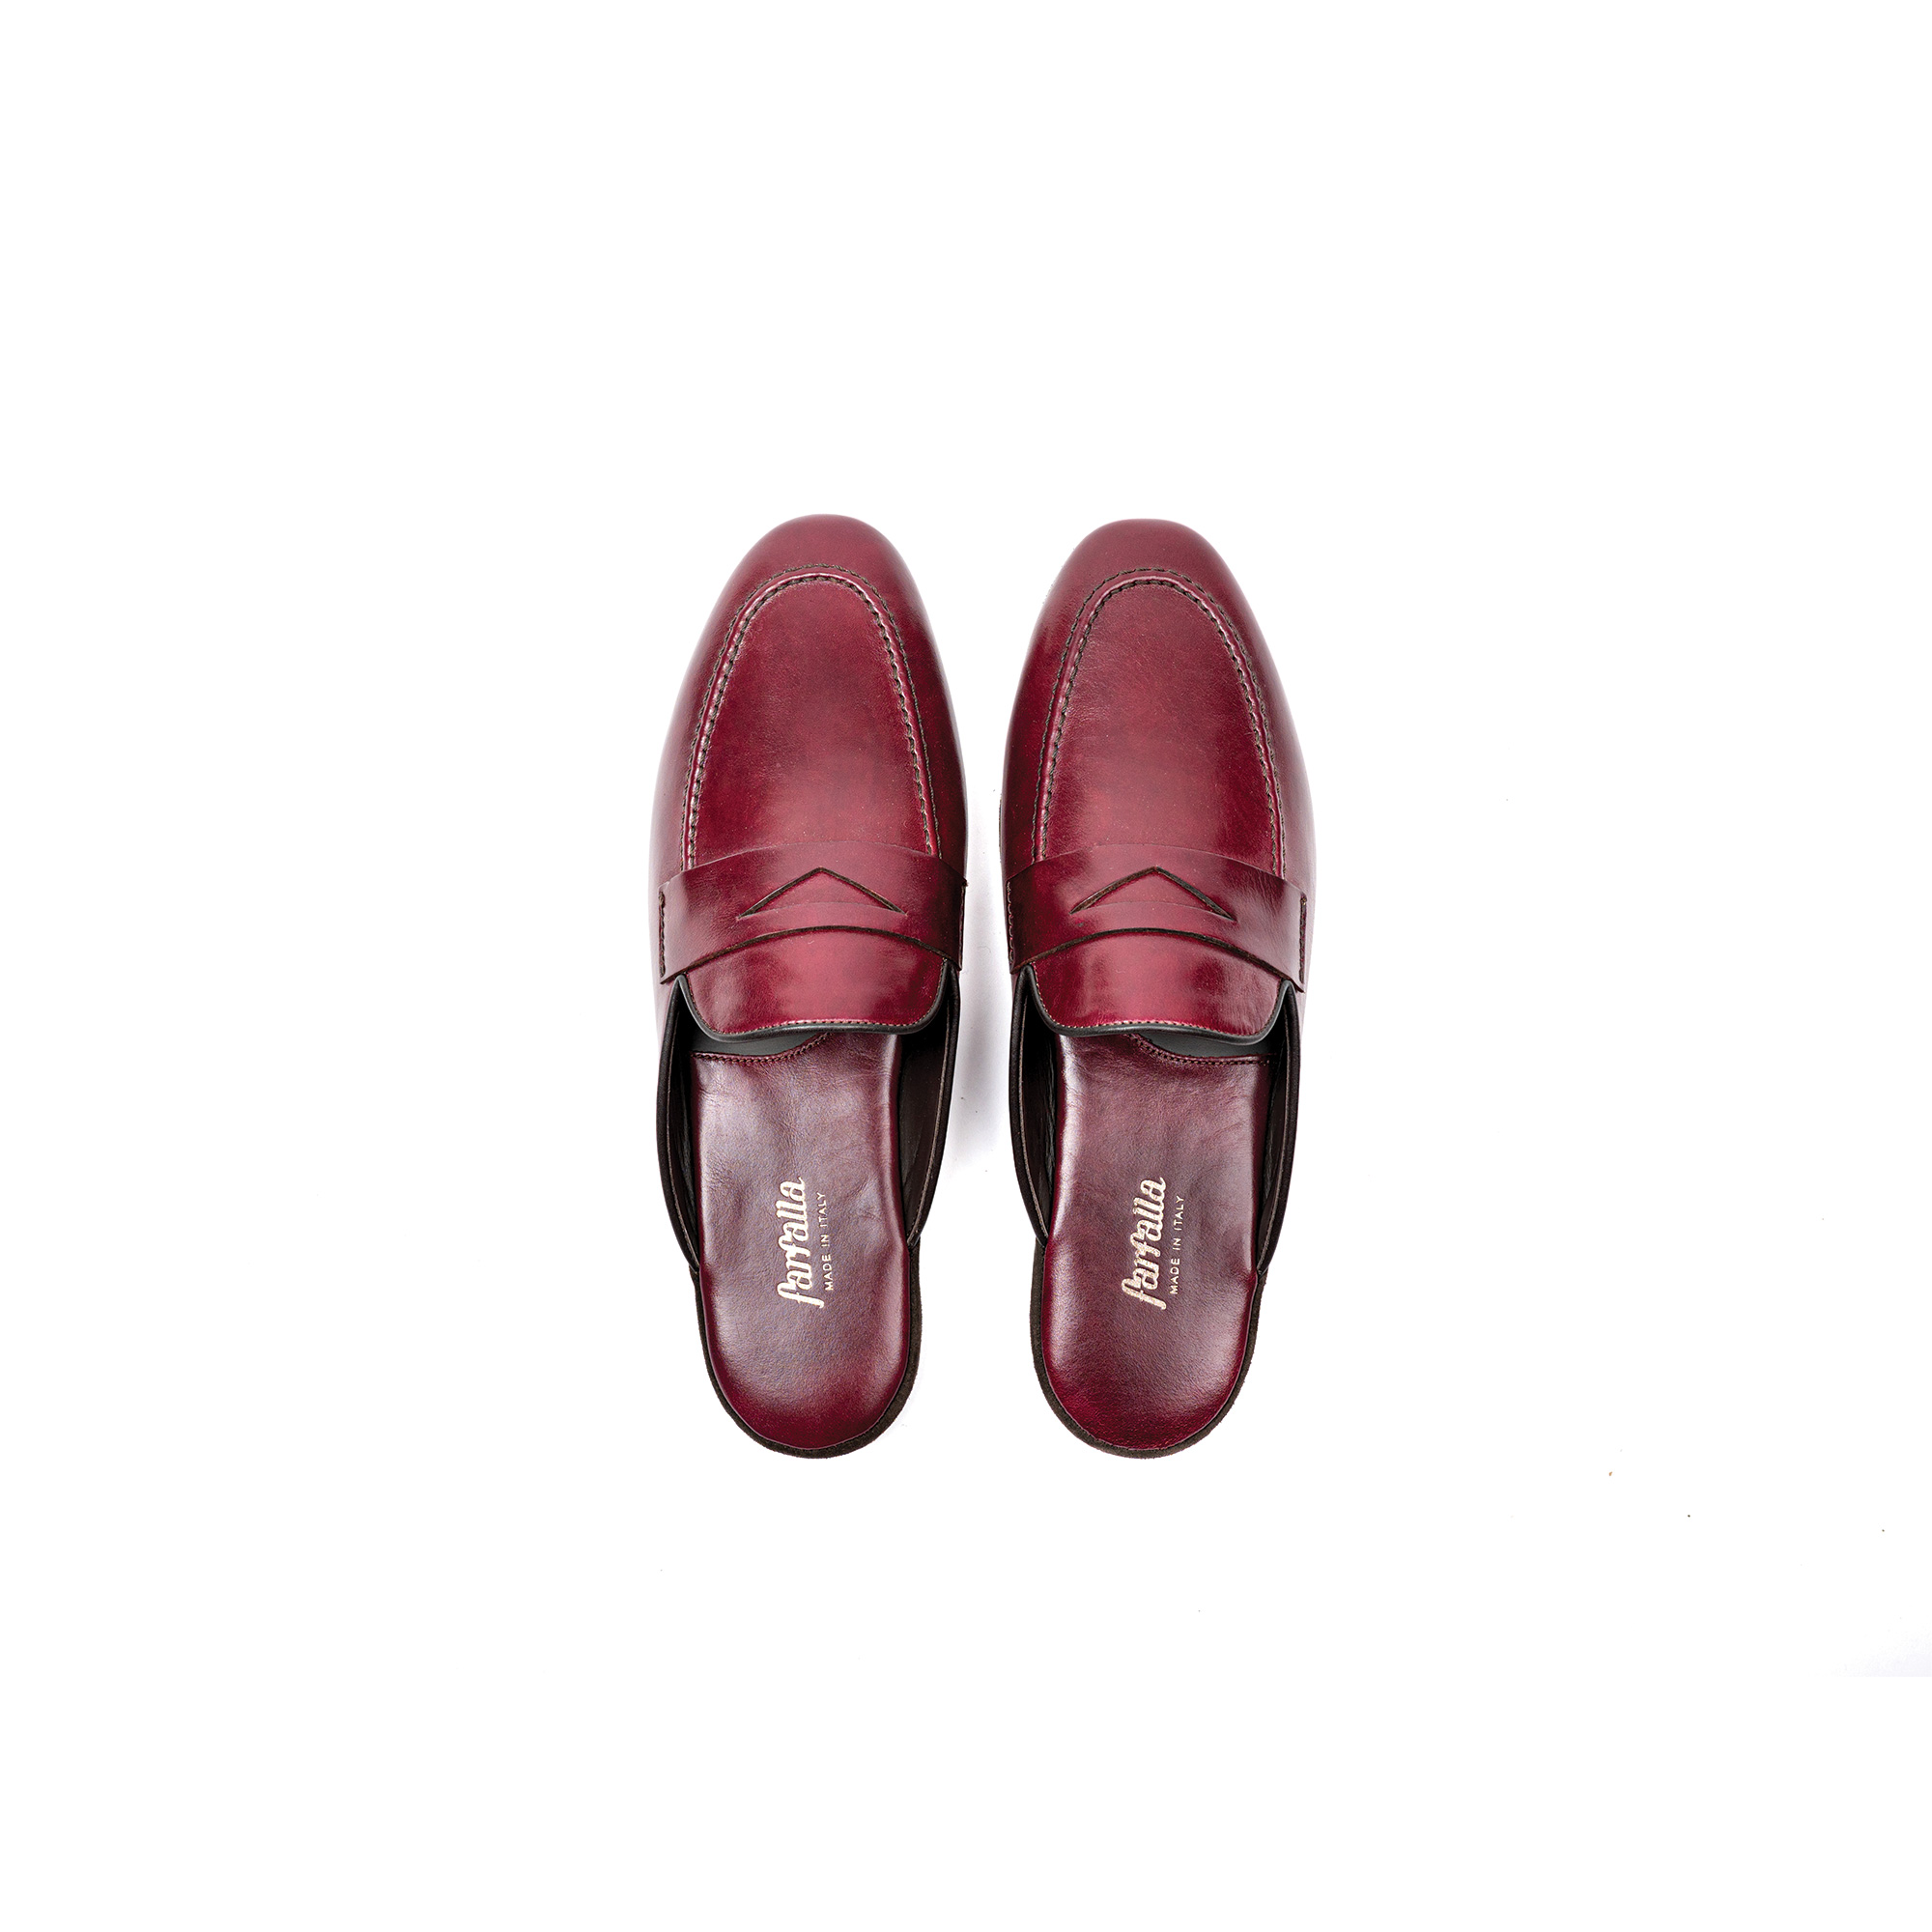 Pantofola interno classico in pelle vitello bordeaux - Farfalla italian slippers